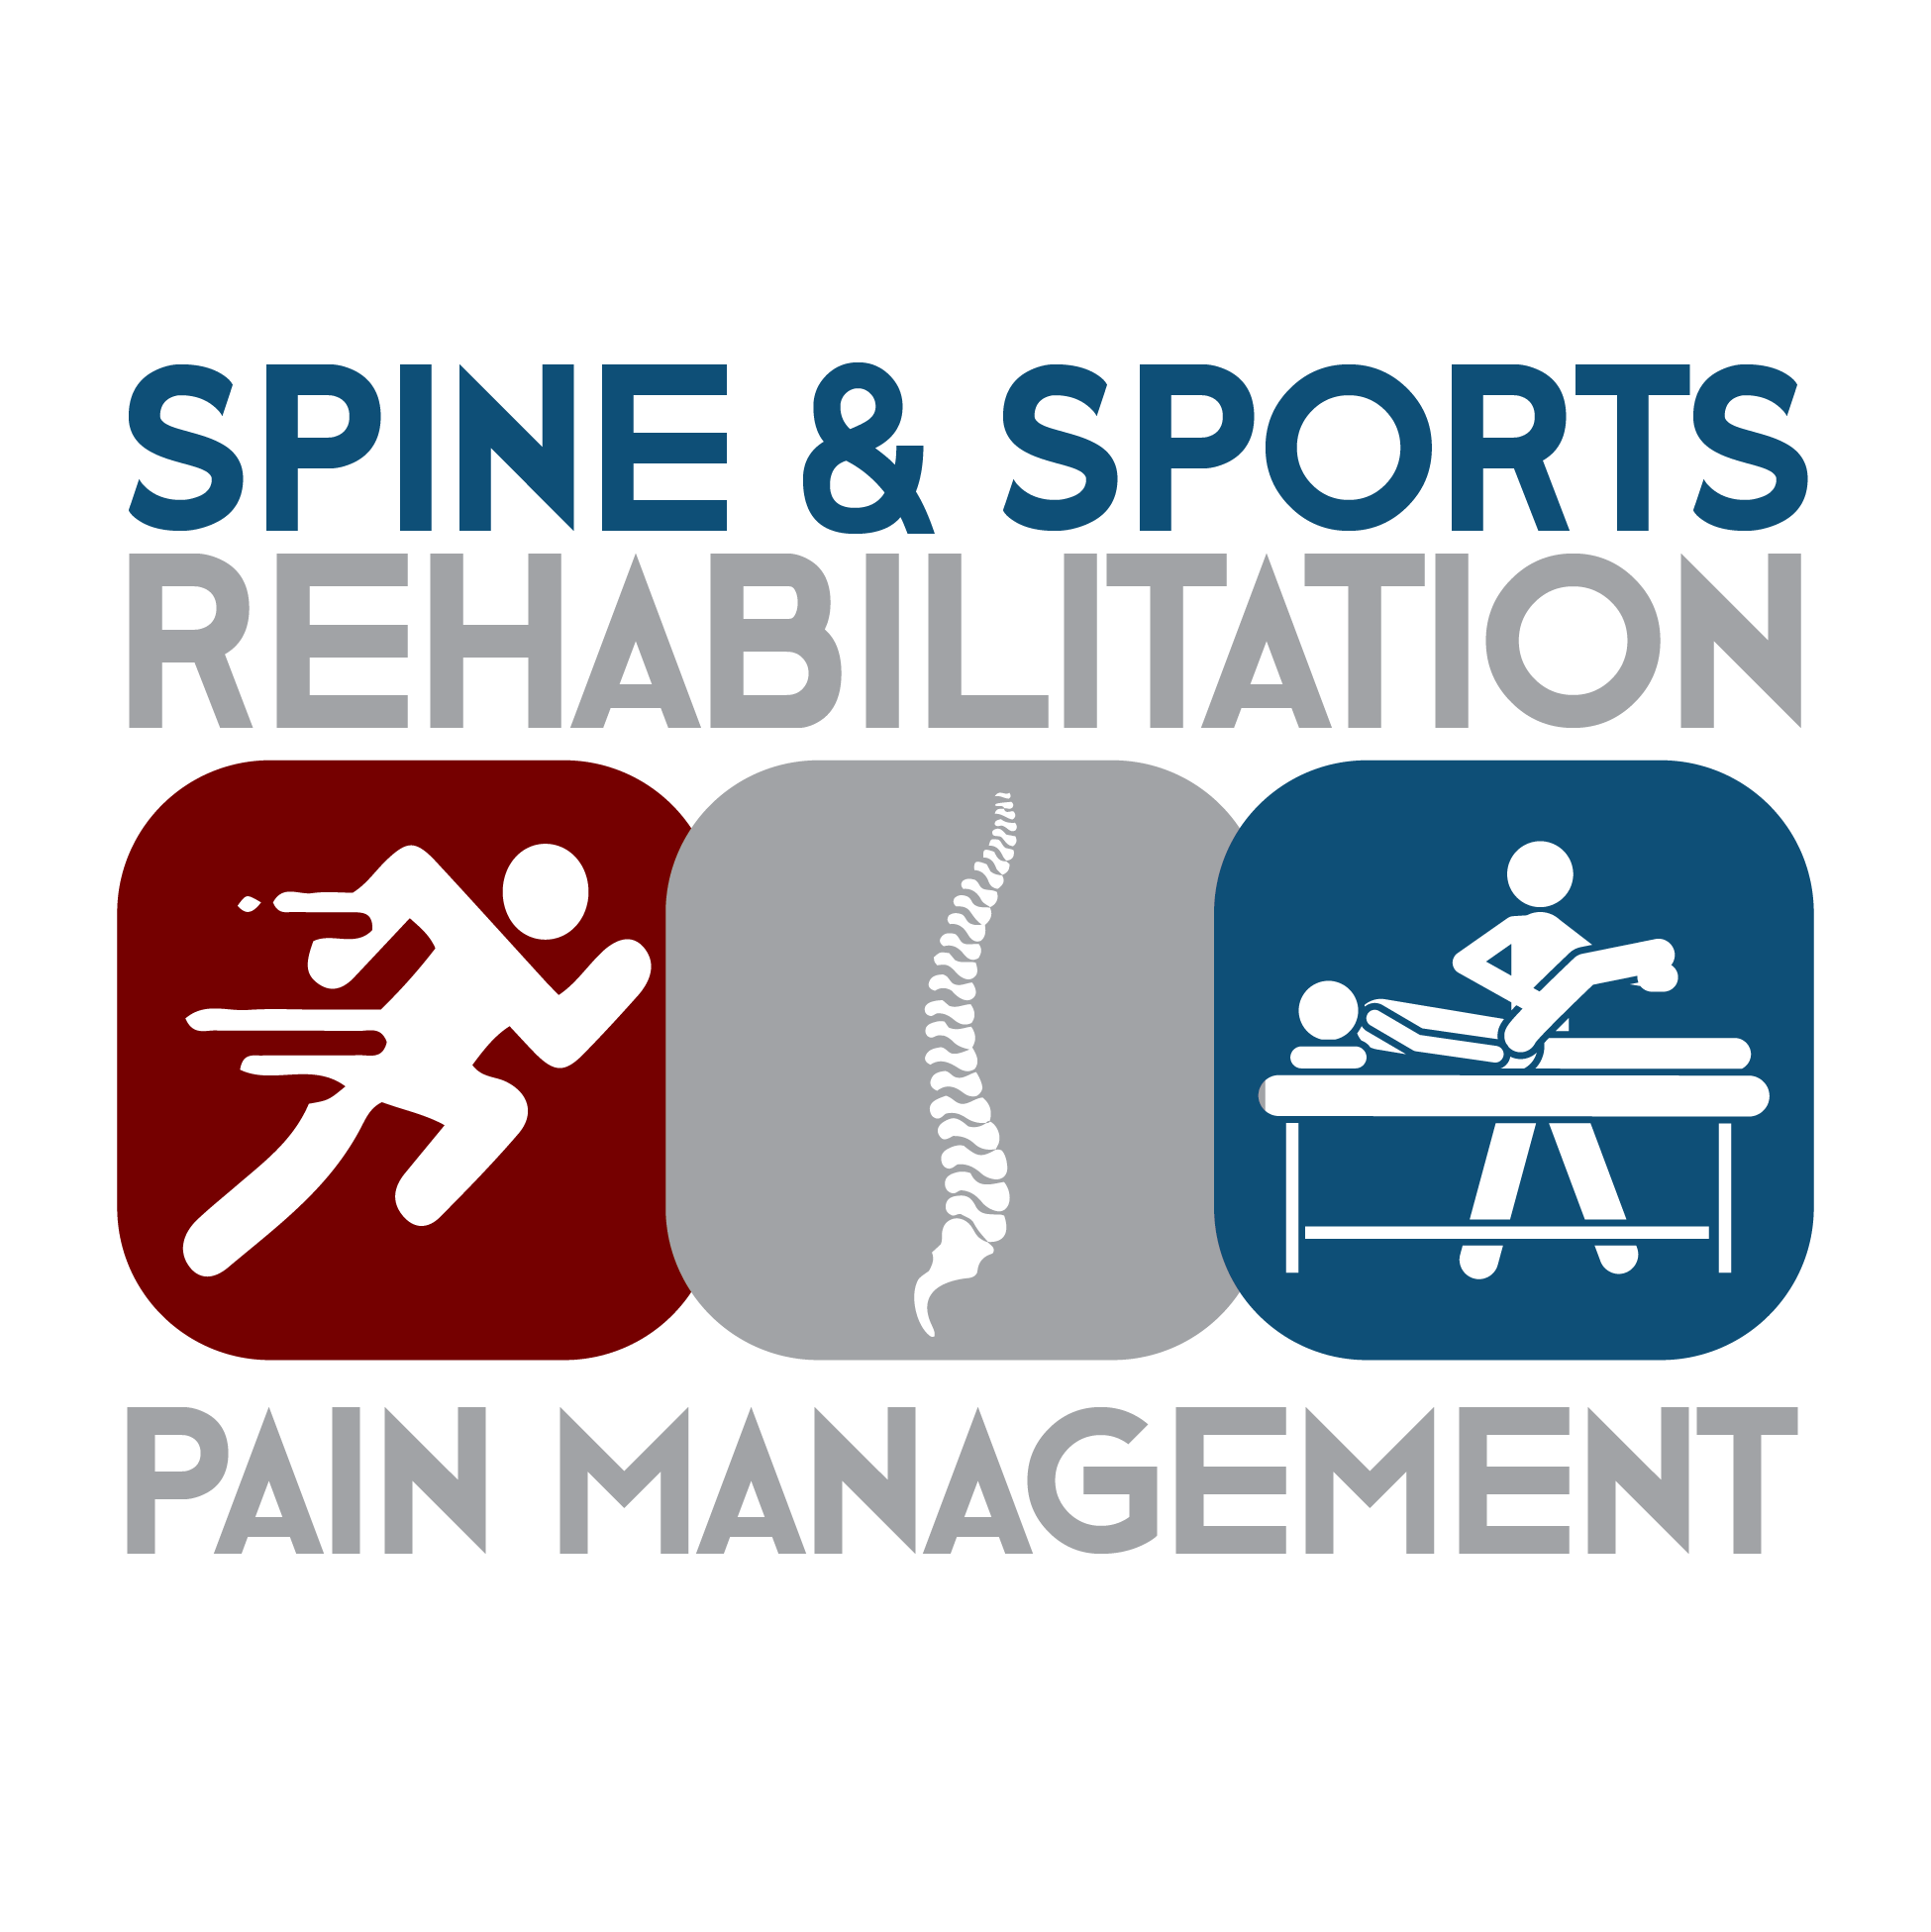 Spine & Sports Rehabilitation Pain Management